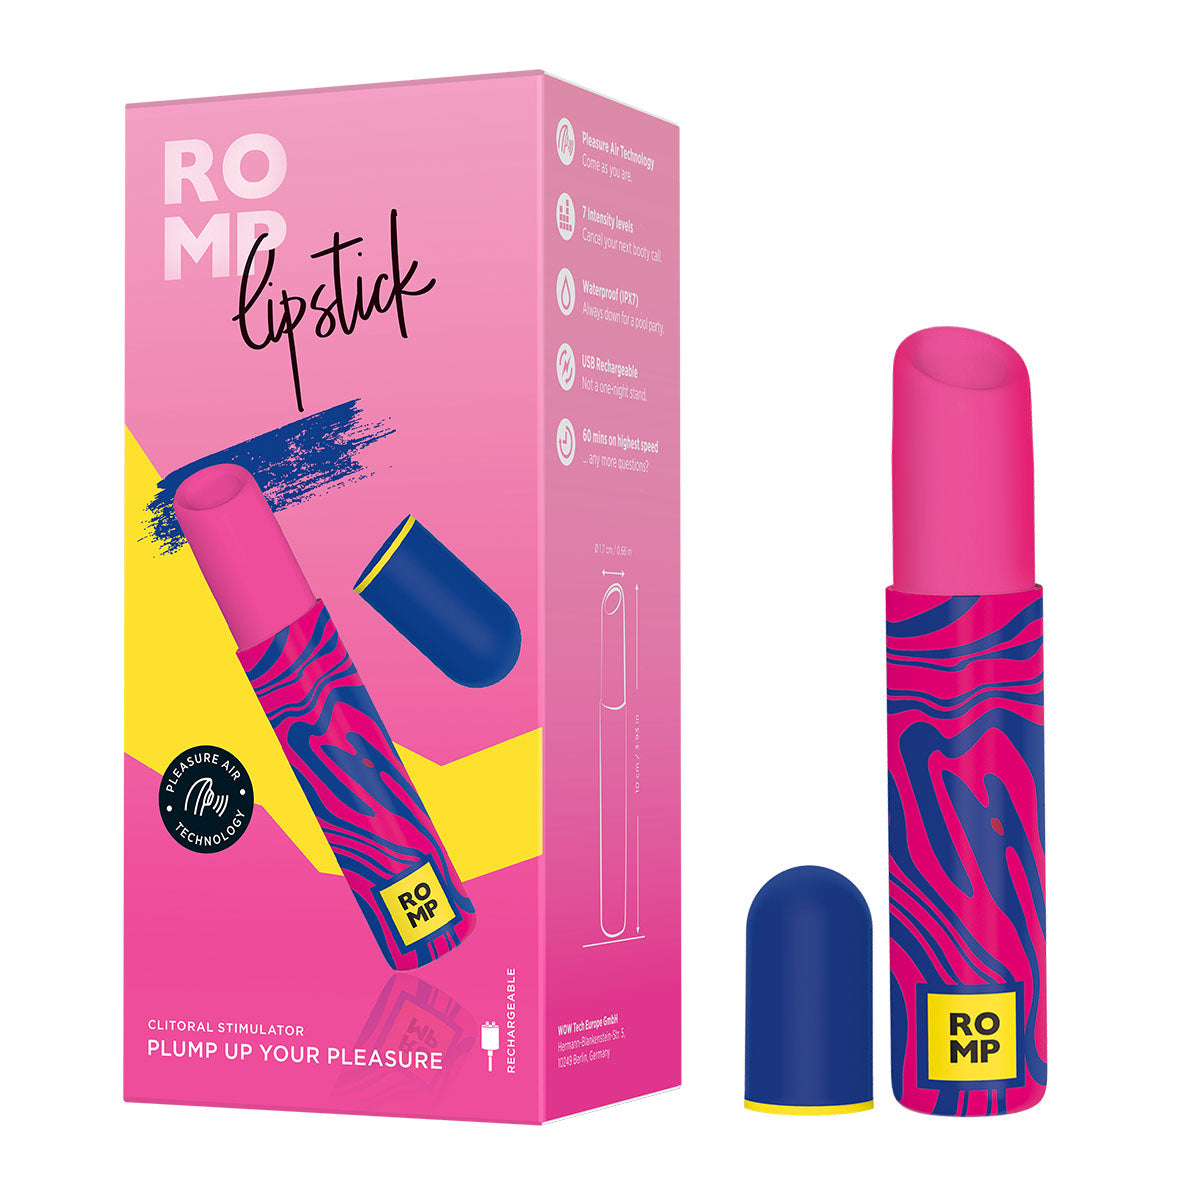 ROMP Lipstick